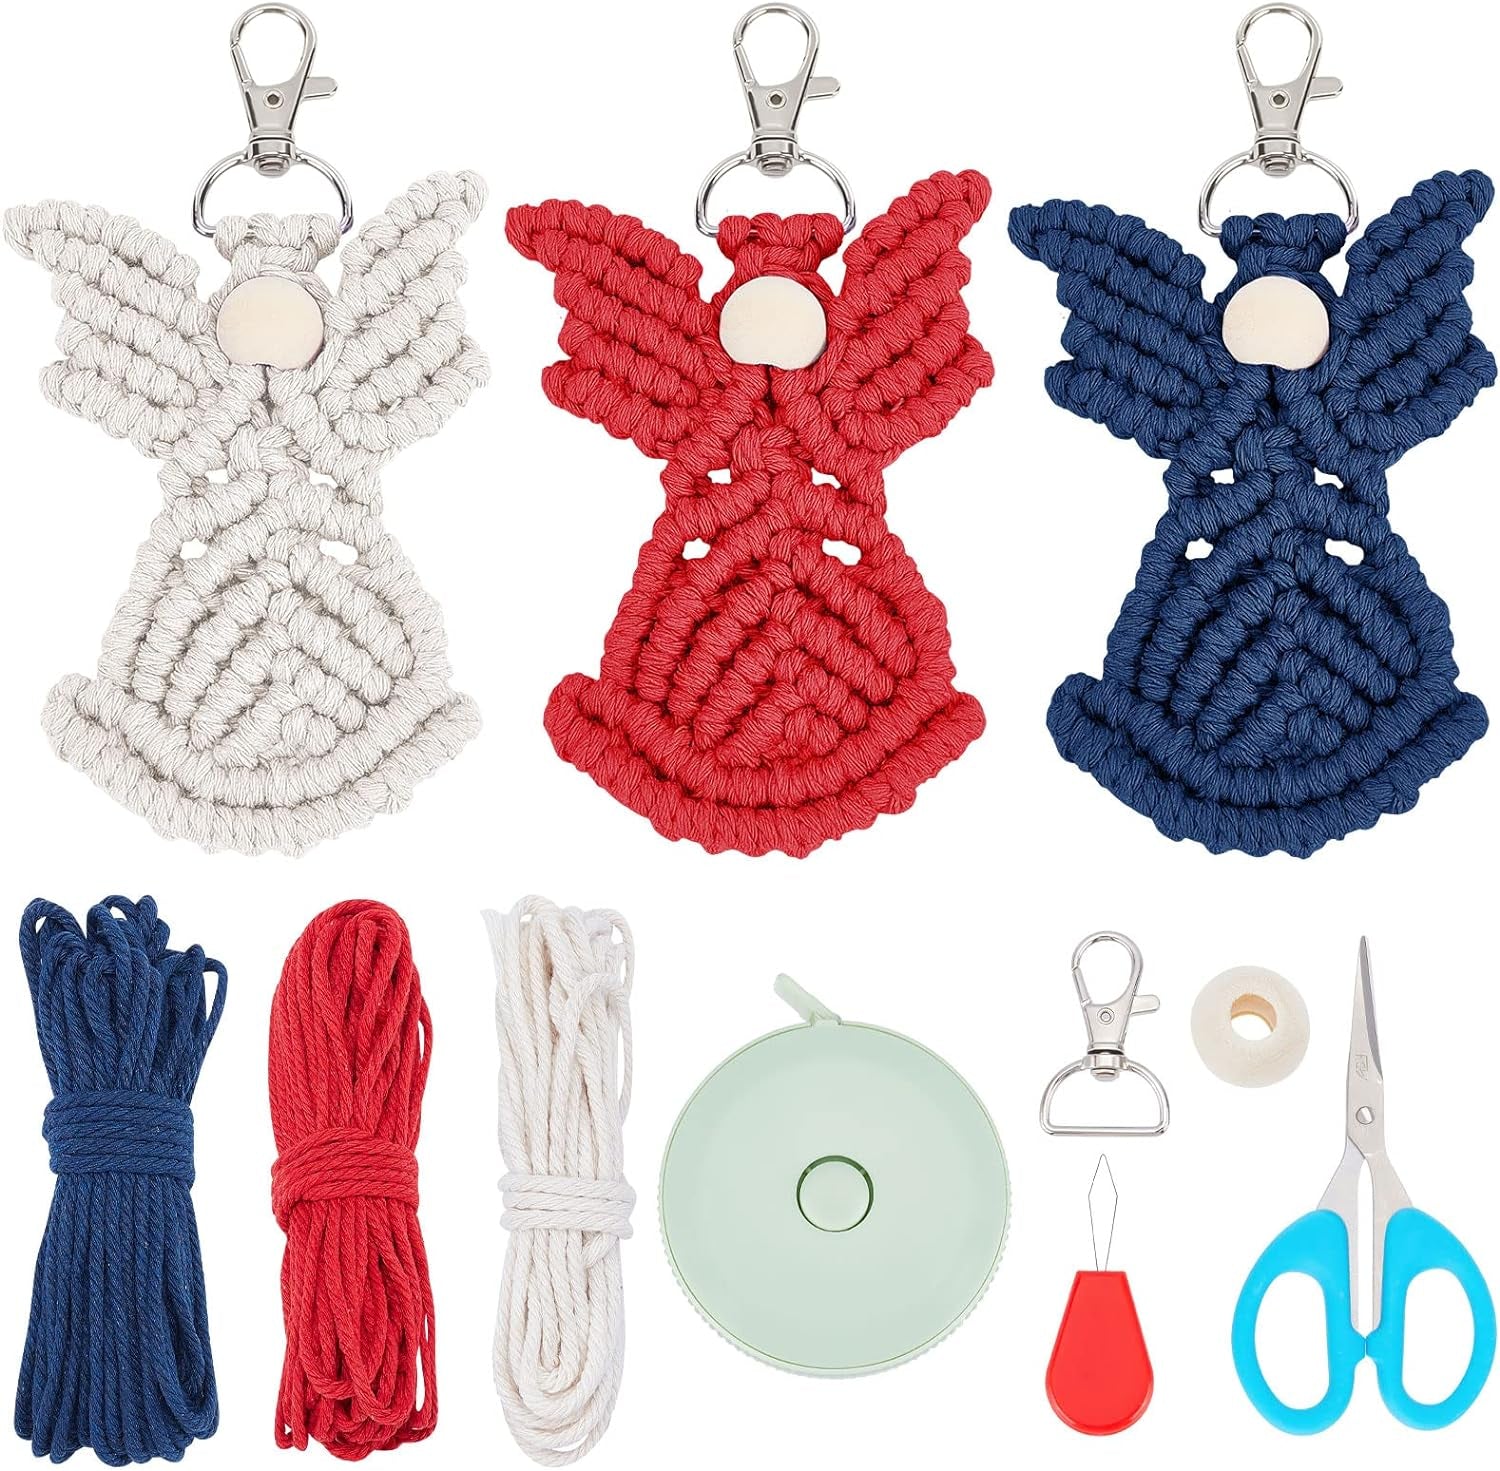 8 Set DIY Macrame Wristlet Keychain Kits for Adults Colorful Macrame Cord Knotting Kit Boho Mini Macrame Tassel Keychain with Instruction + Video for Car Key Purse Phone Wallet Charm